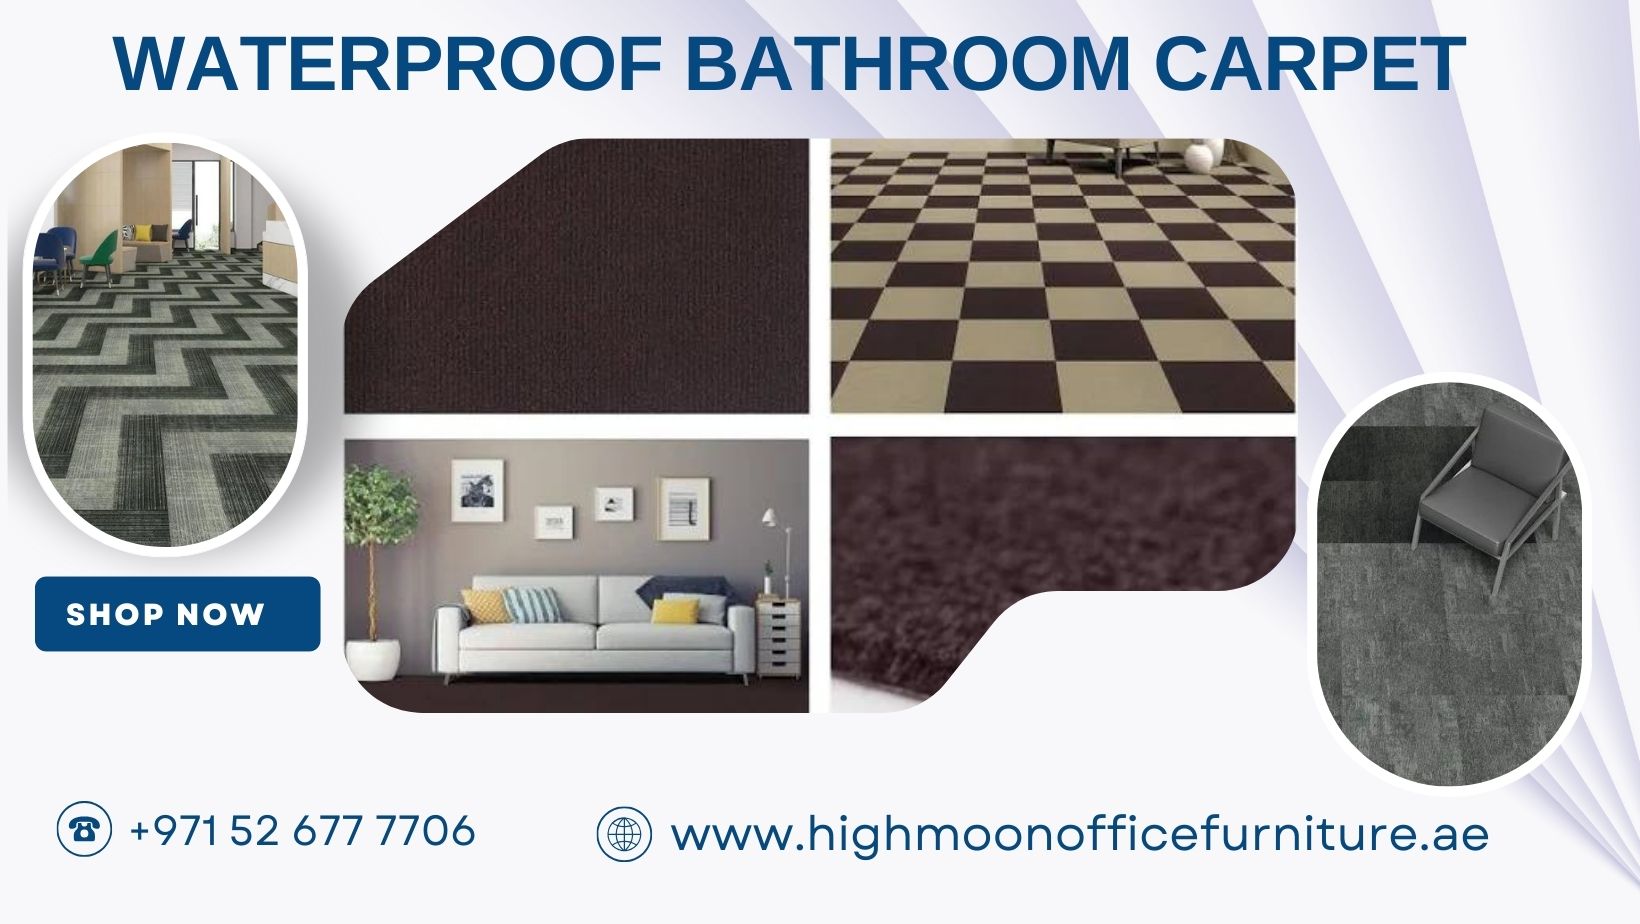 High-Quality Waterproof Bathroom Carpet Tiles in Duba